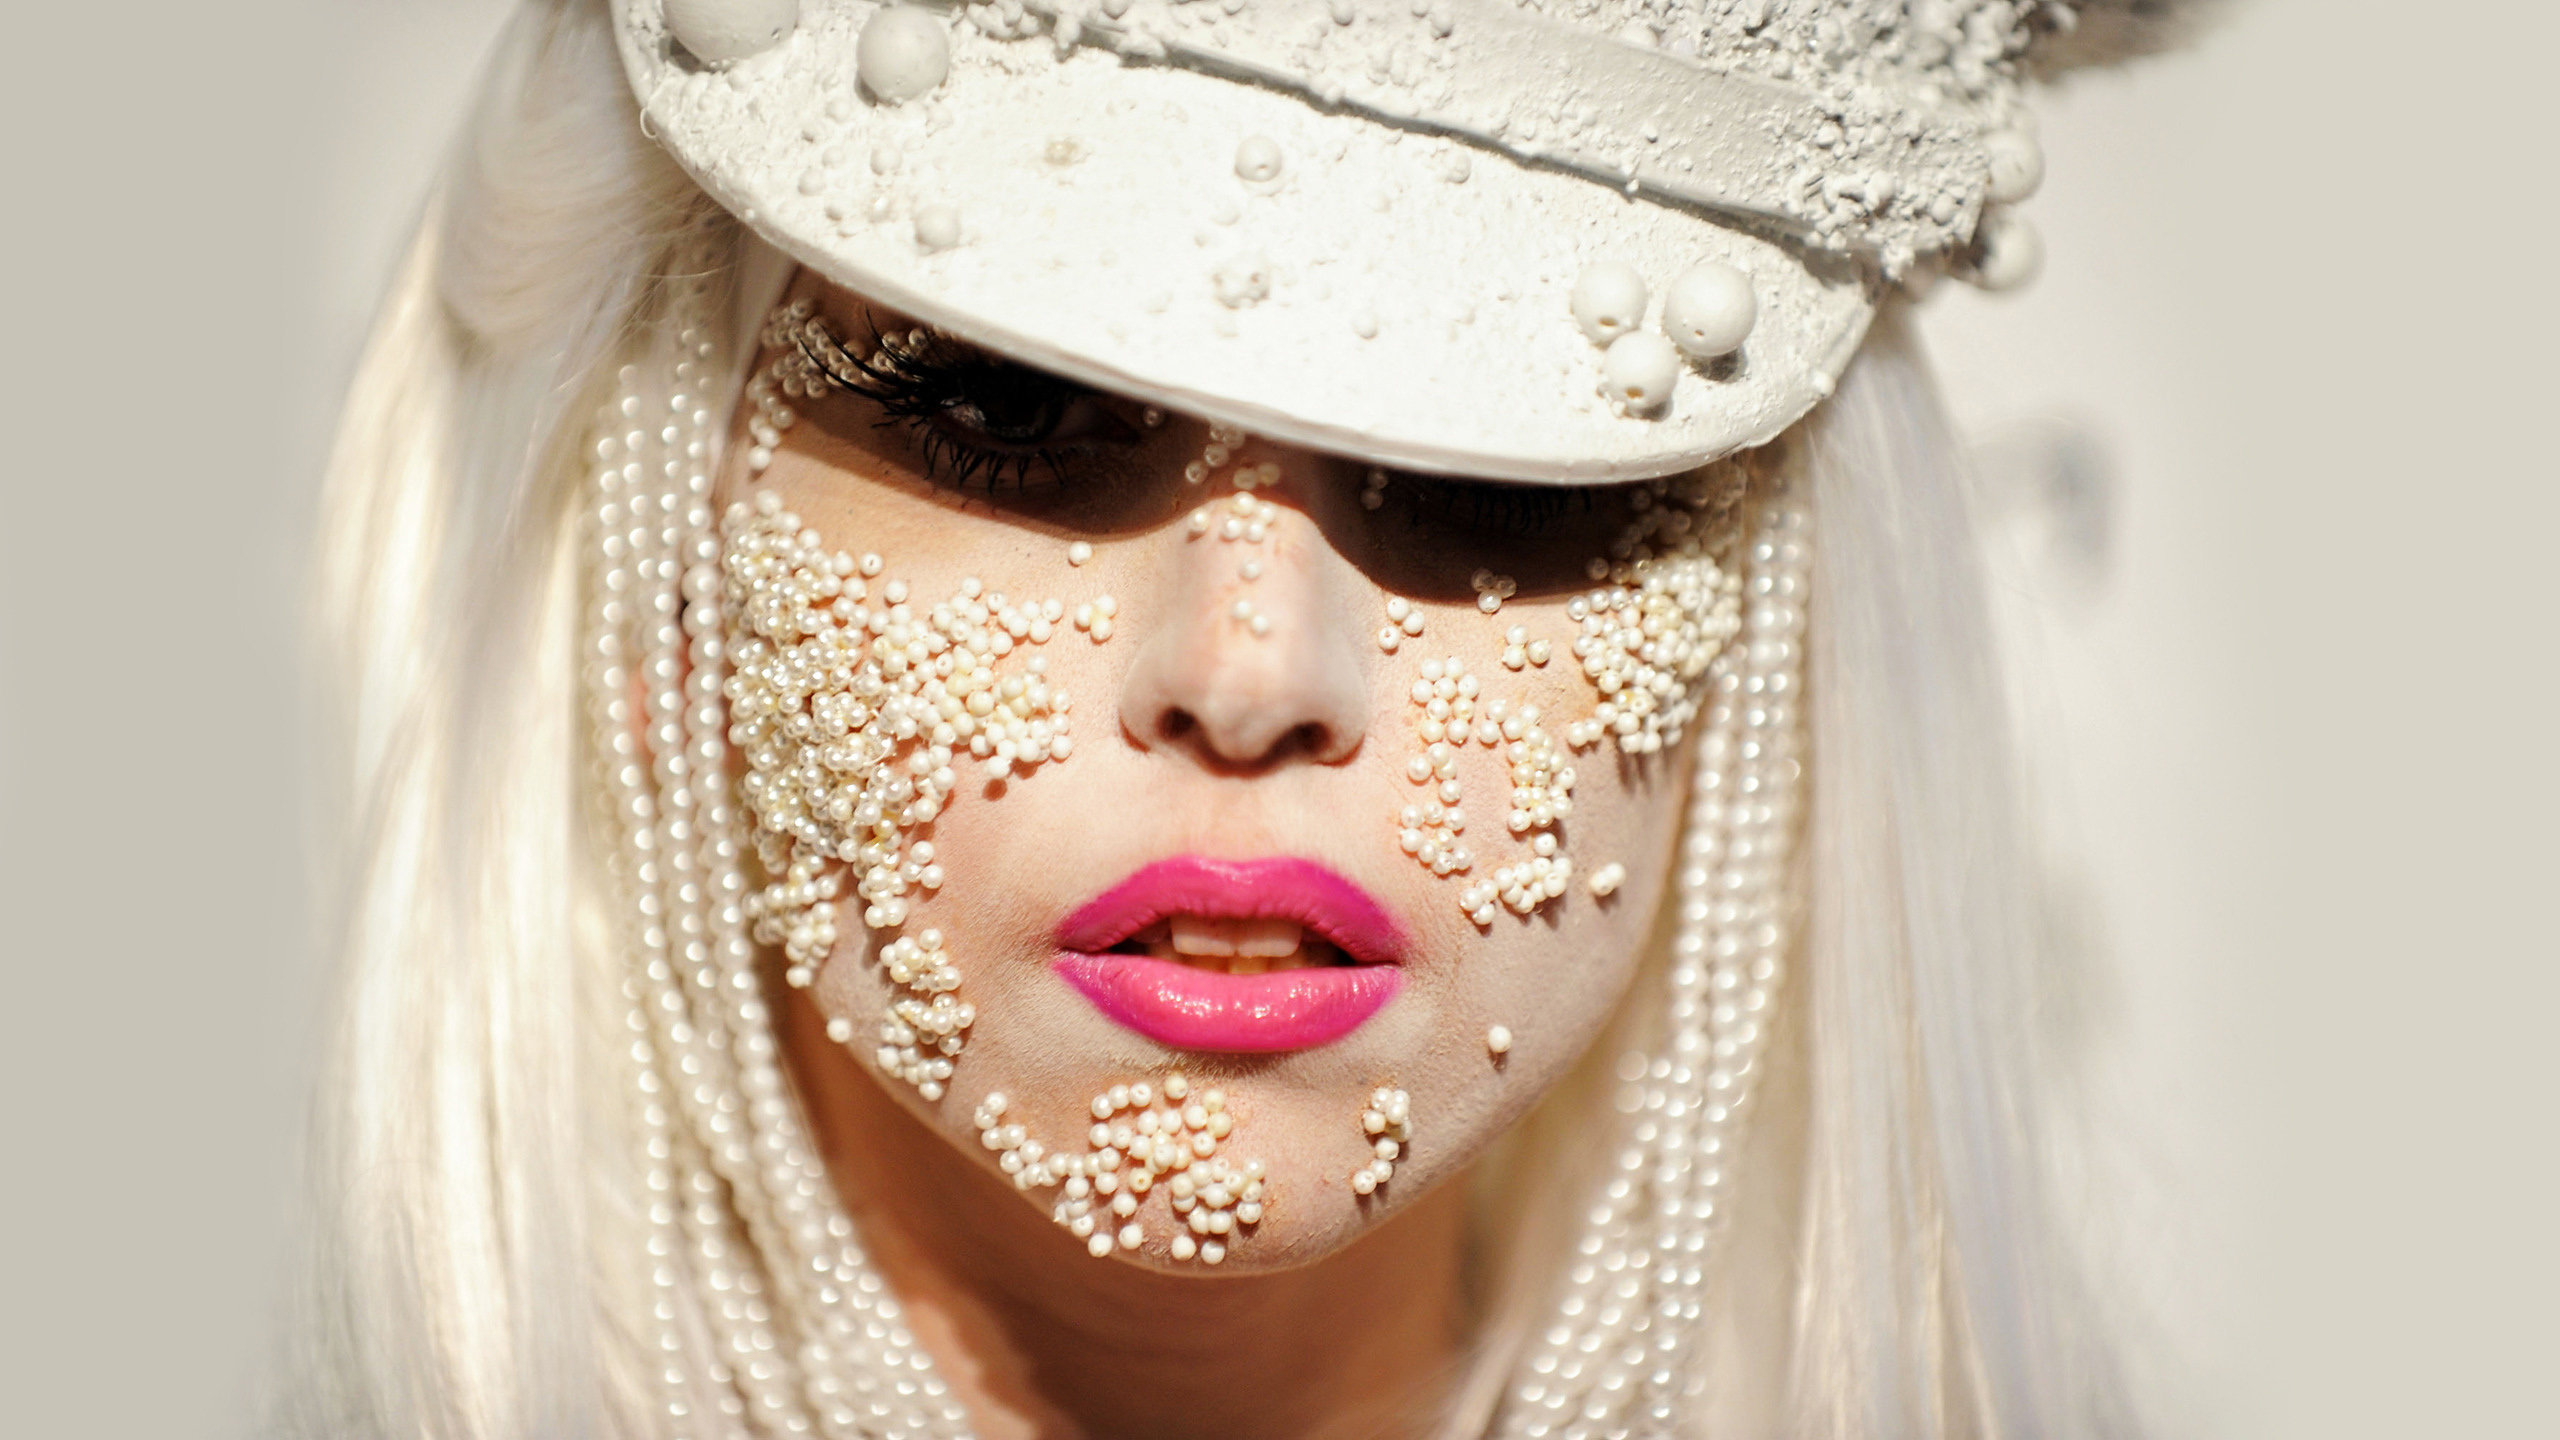 Free download Lady Gaga wallpaper ID:291390 hd 2560x1440 for desktop